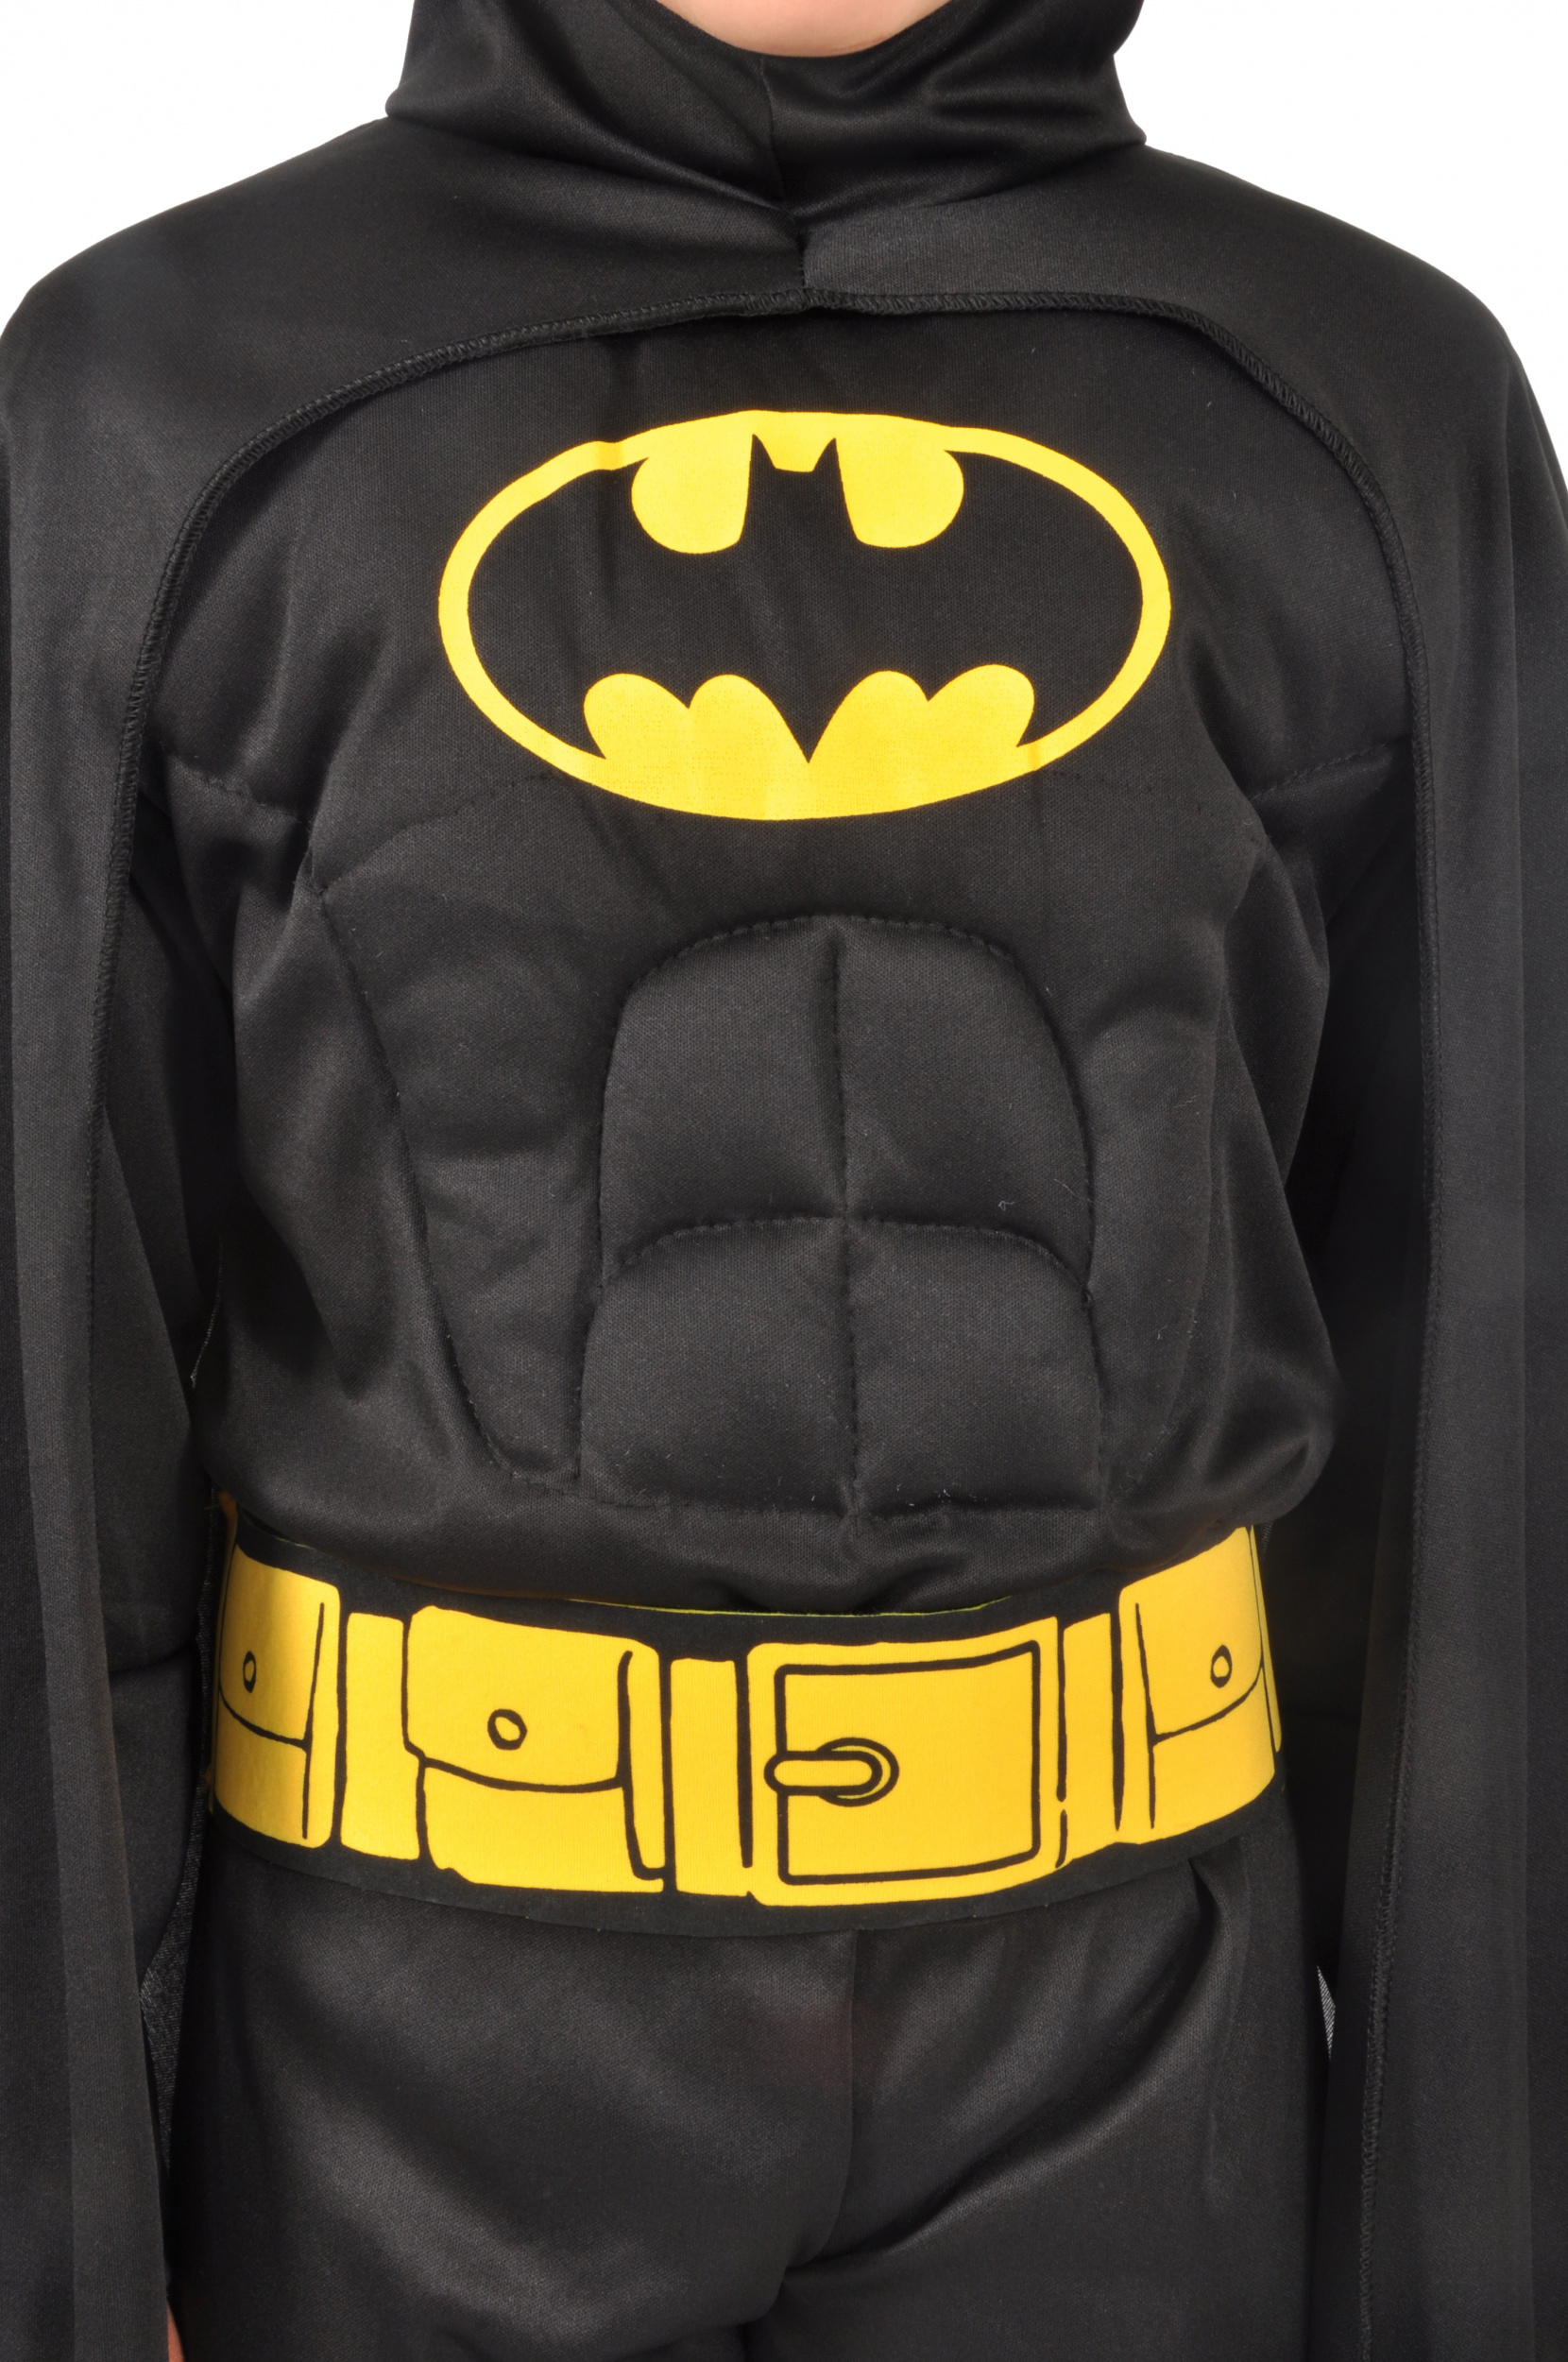 Kostume m/Muskler - Batman (135 cm)